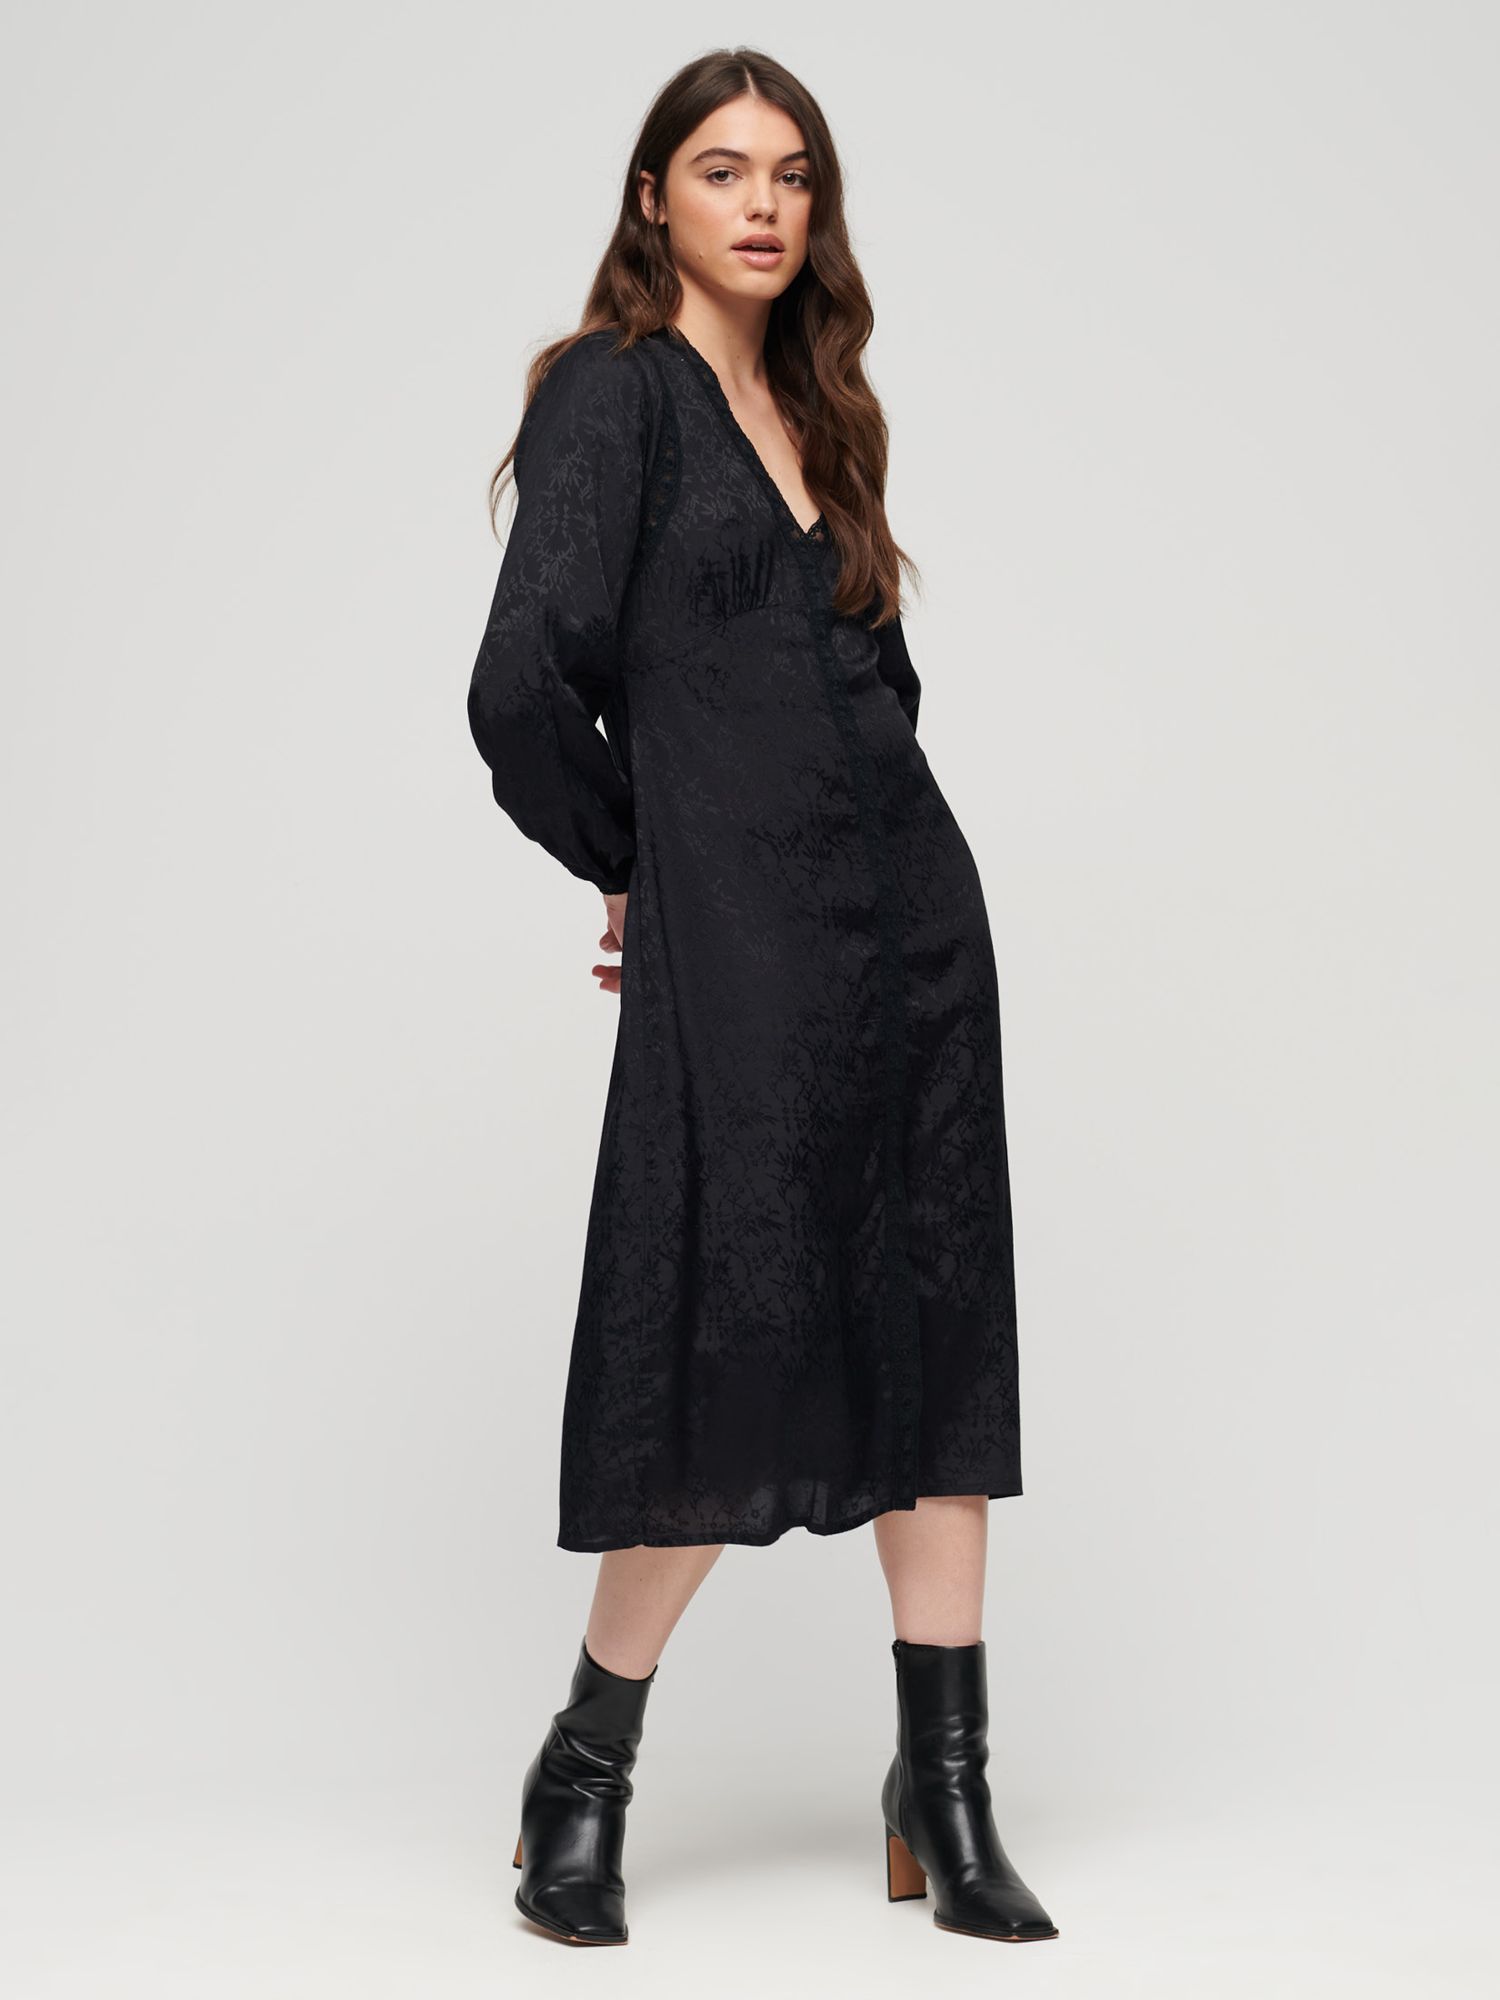 Superdry Lace Trim Midi Dress, Urban Black at John Lewis & Partners